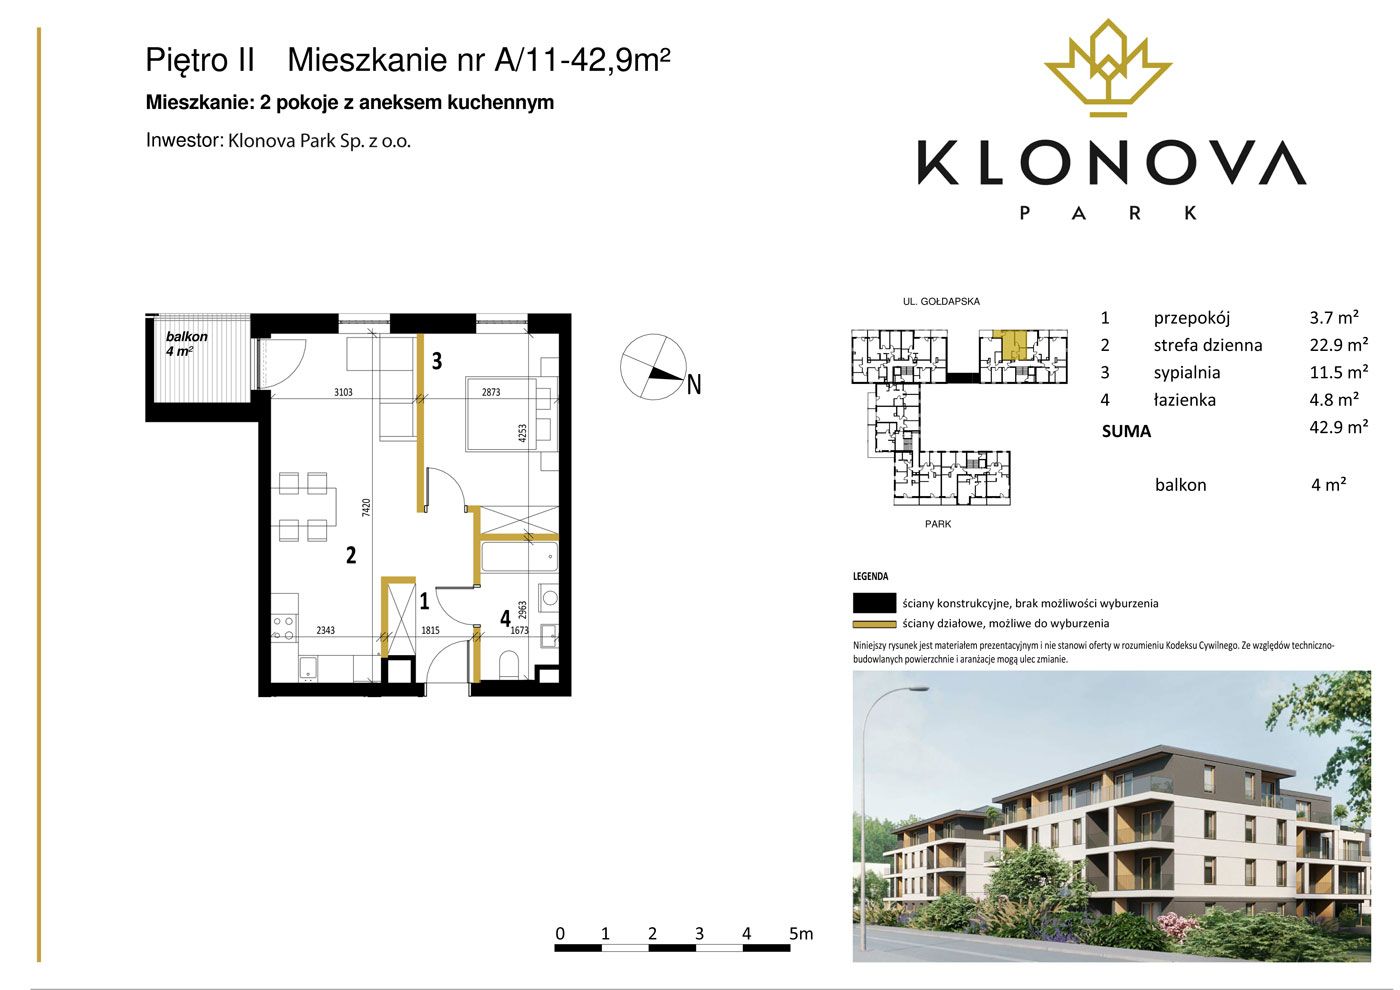 Apartamenty Klonova Park - Plan mieszkania A/11